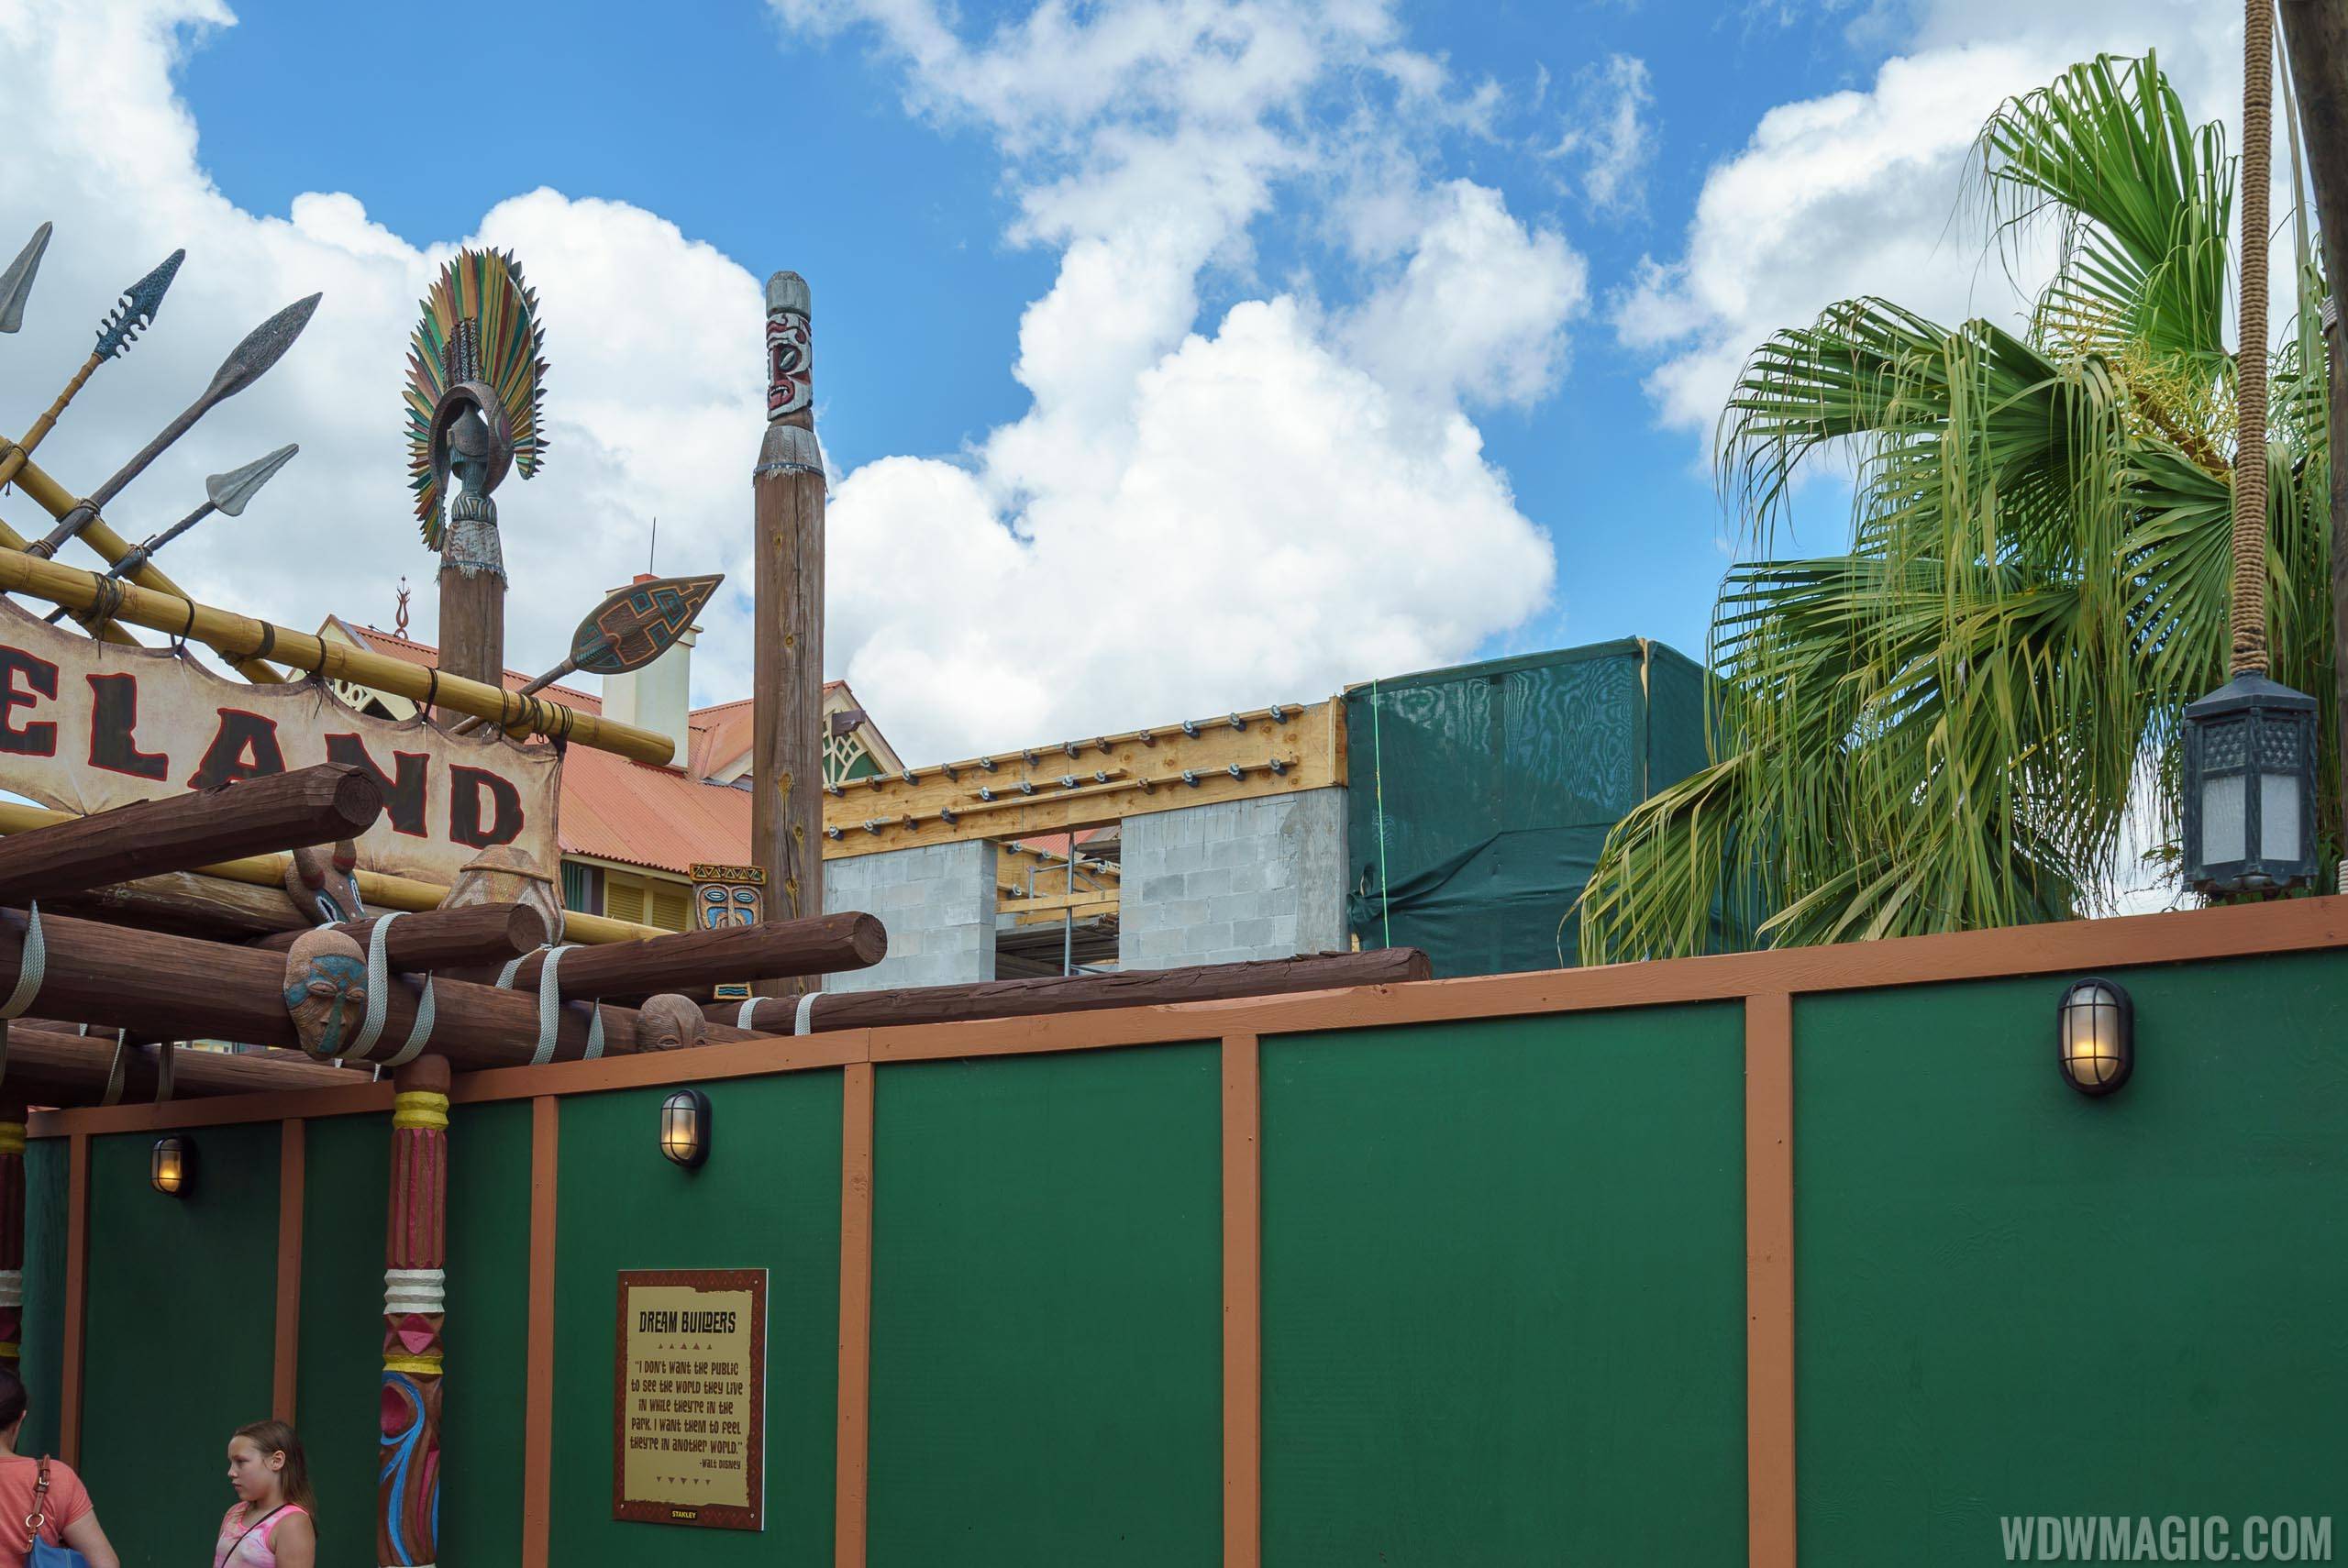 Club 33 location under construction in Adventureland at the Magic Kingdom